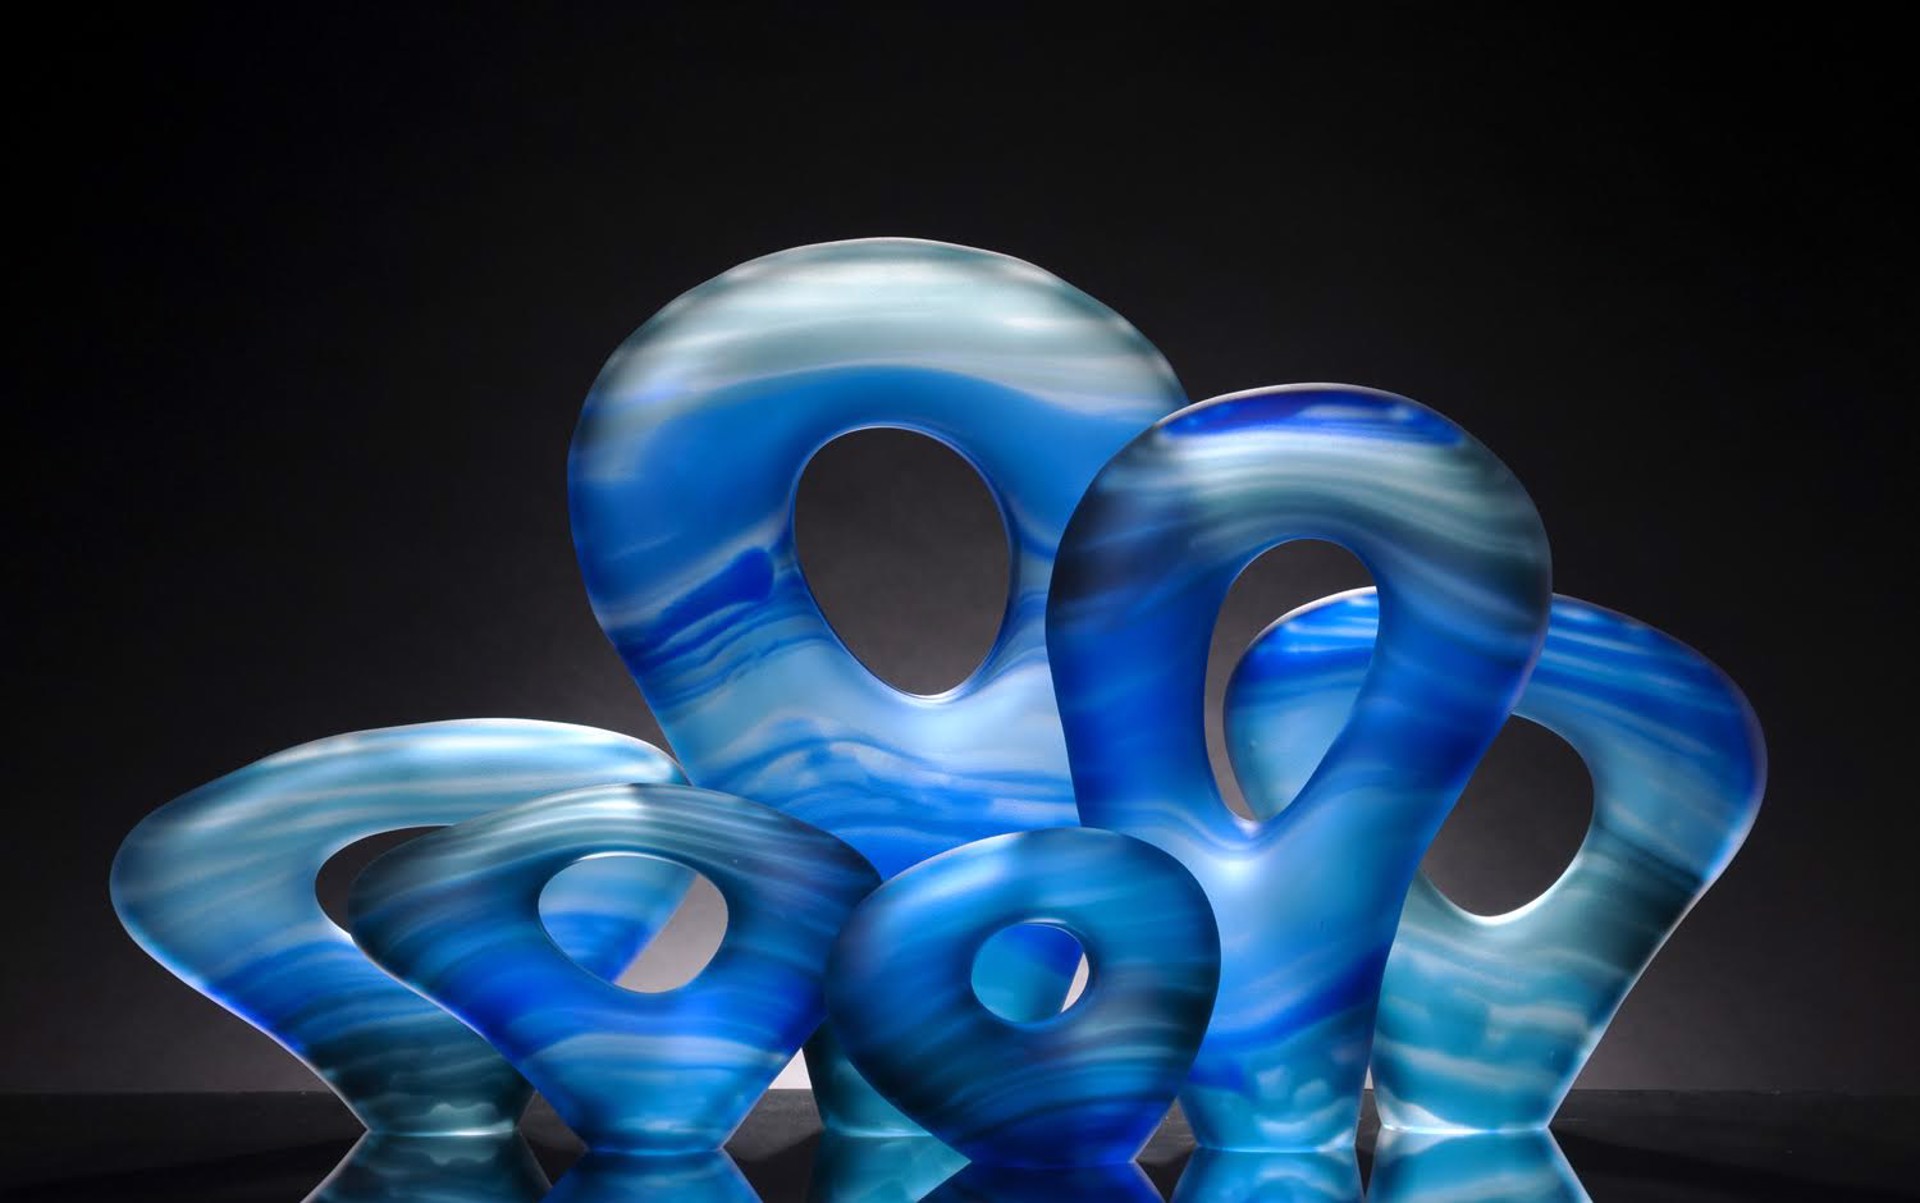 Swirlpools by Rick Eggert